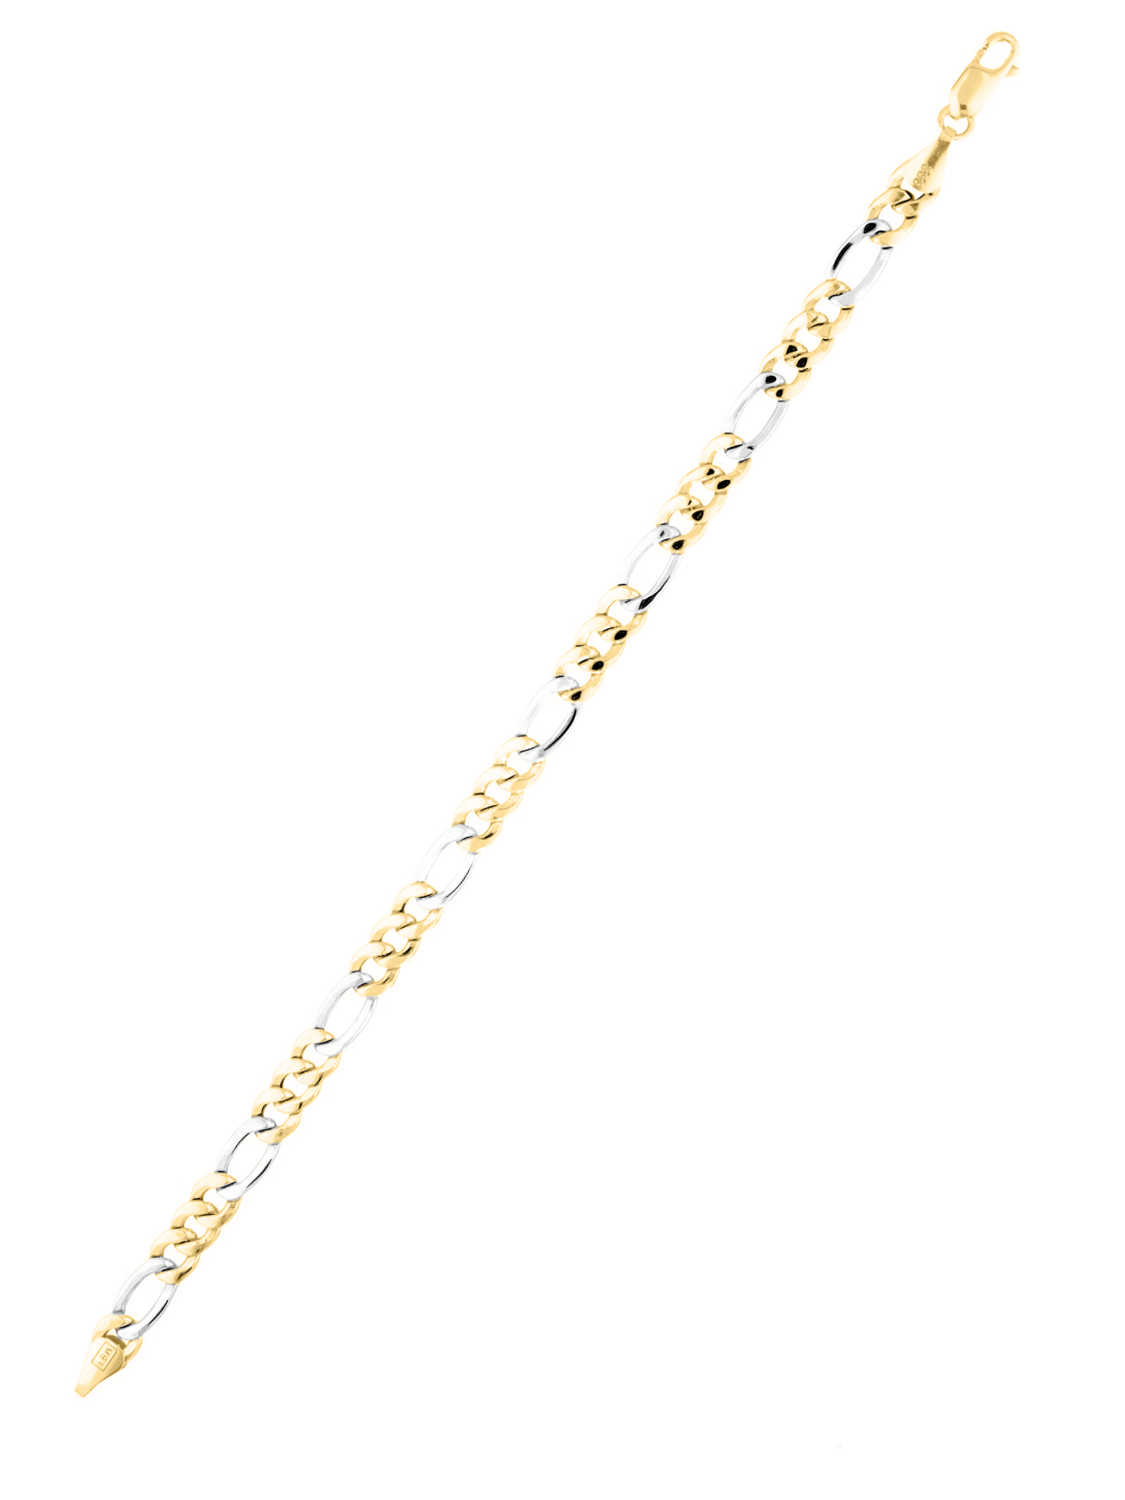 Magali - Goldkette Bicolor Karabiner - Breite 6 mm - Länge 45 cm